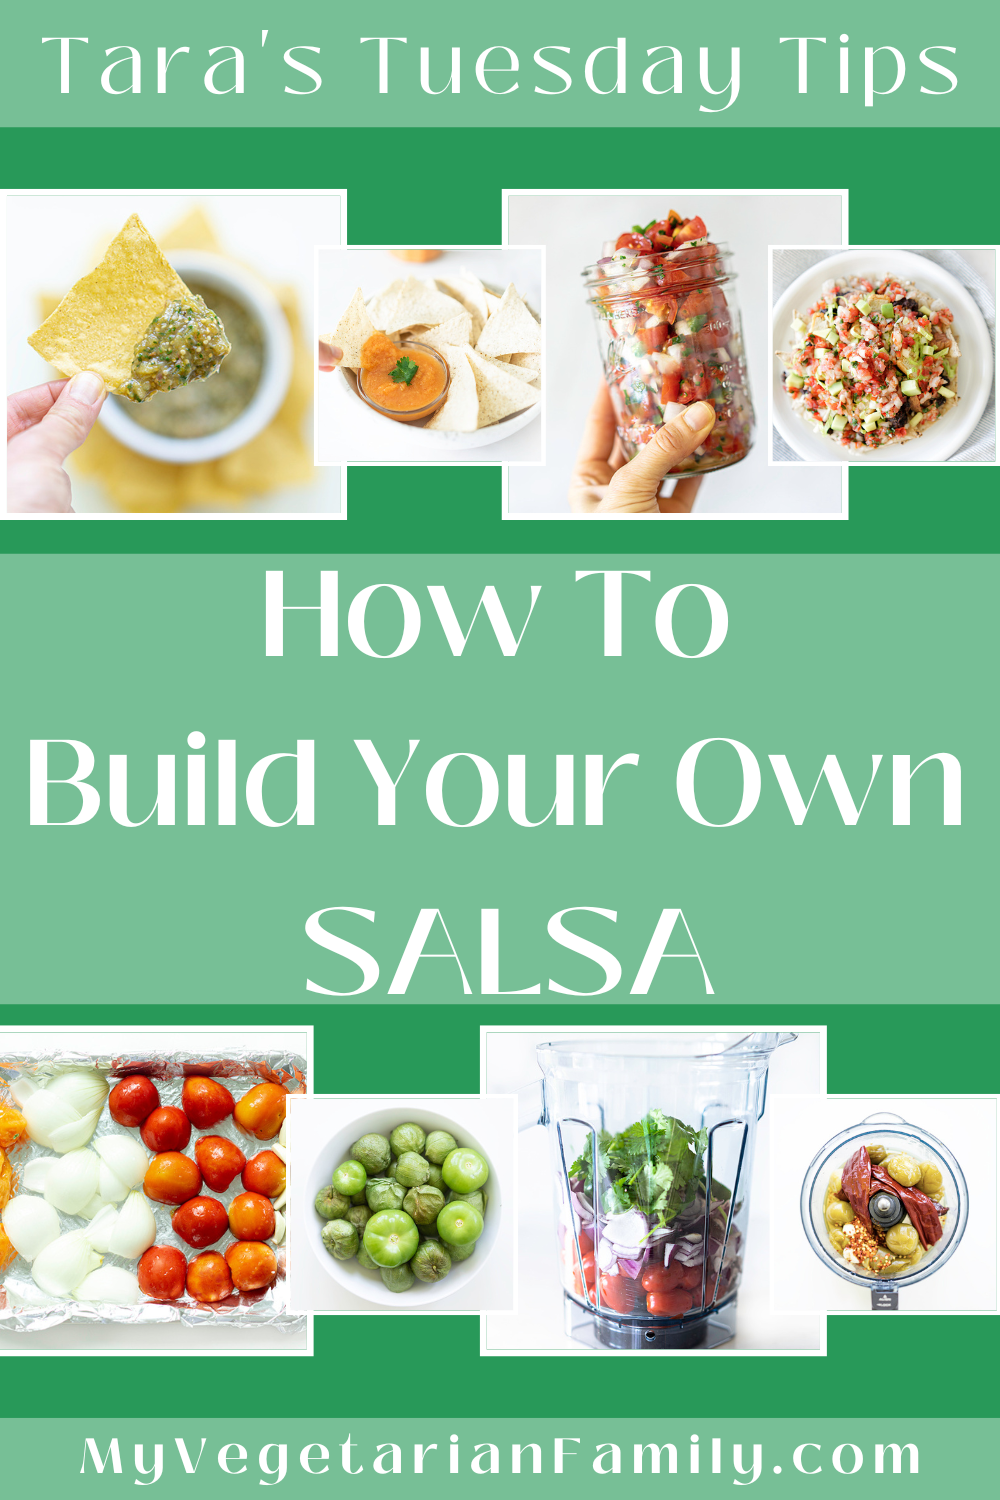 Build Your Own Salsa | My Vegetarian Family | Tara's Tuesday Tips #buildyourownsalsa #tarastuesdaytips